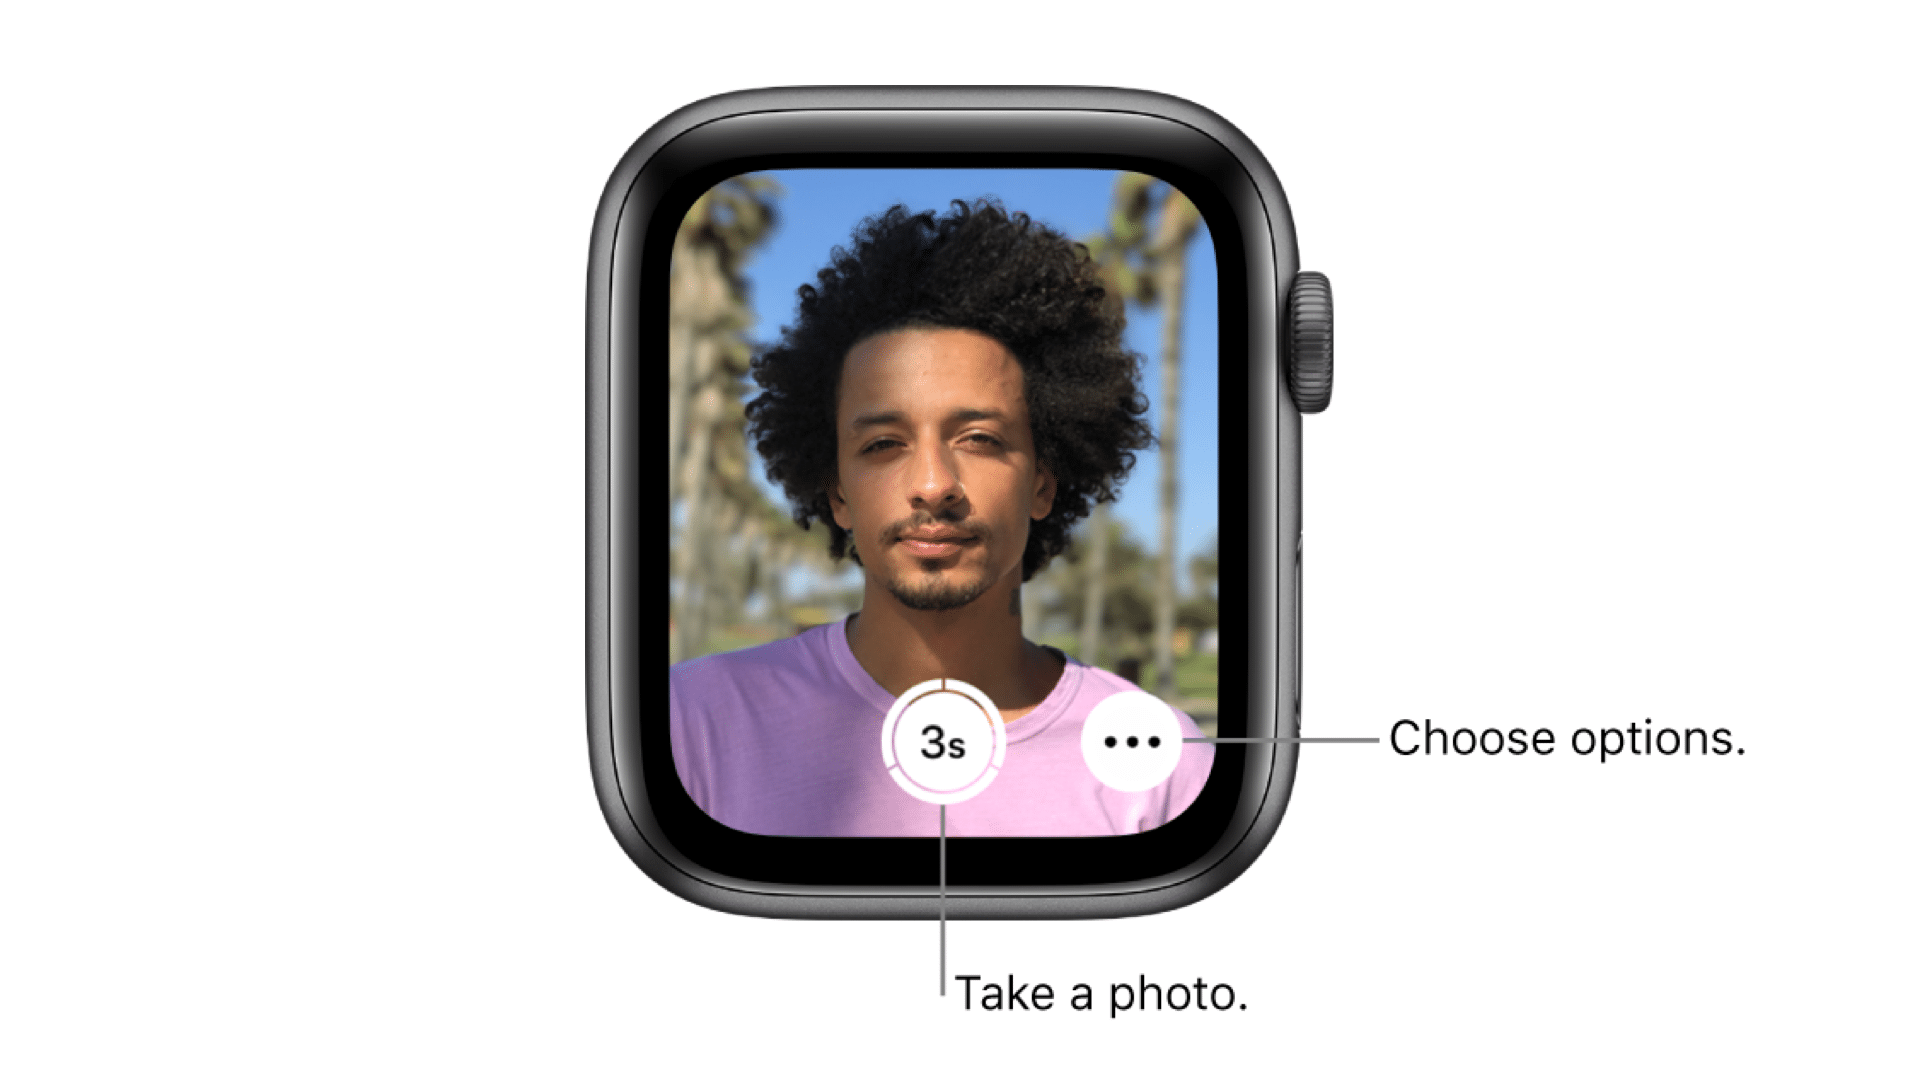 apple-watch-control-iphone-camera